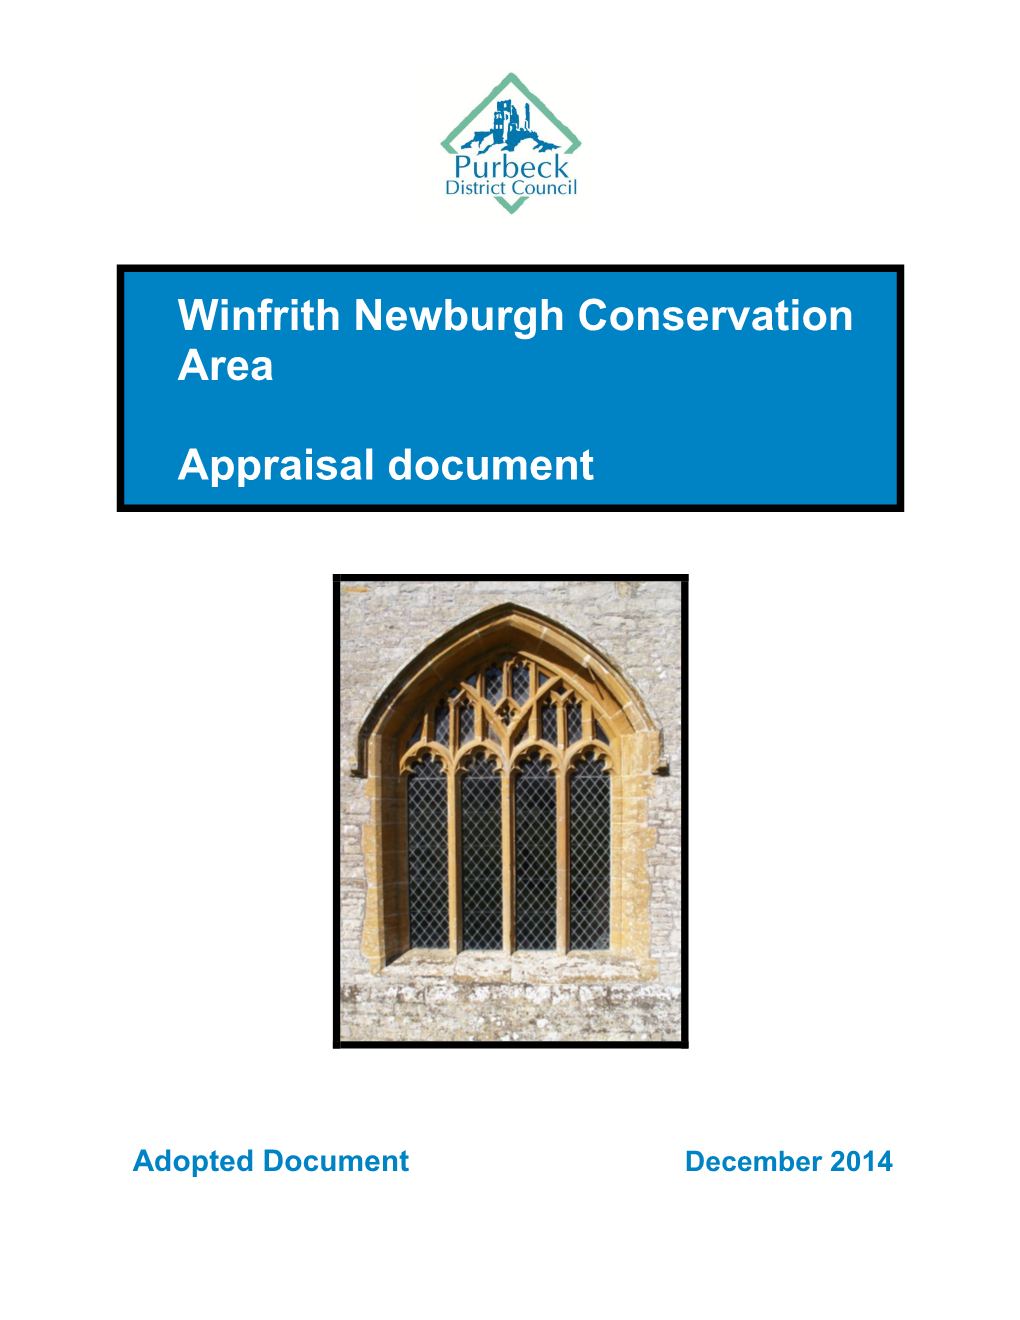 Winfrith Newburgh Conservation Area Appraisal Document